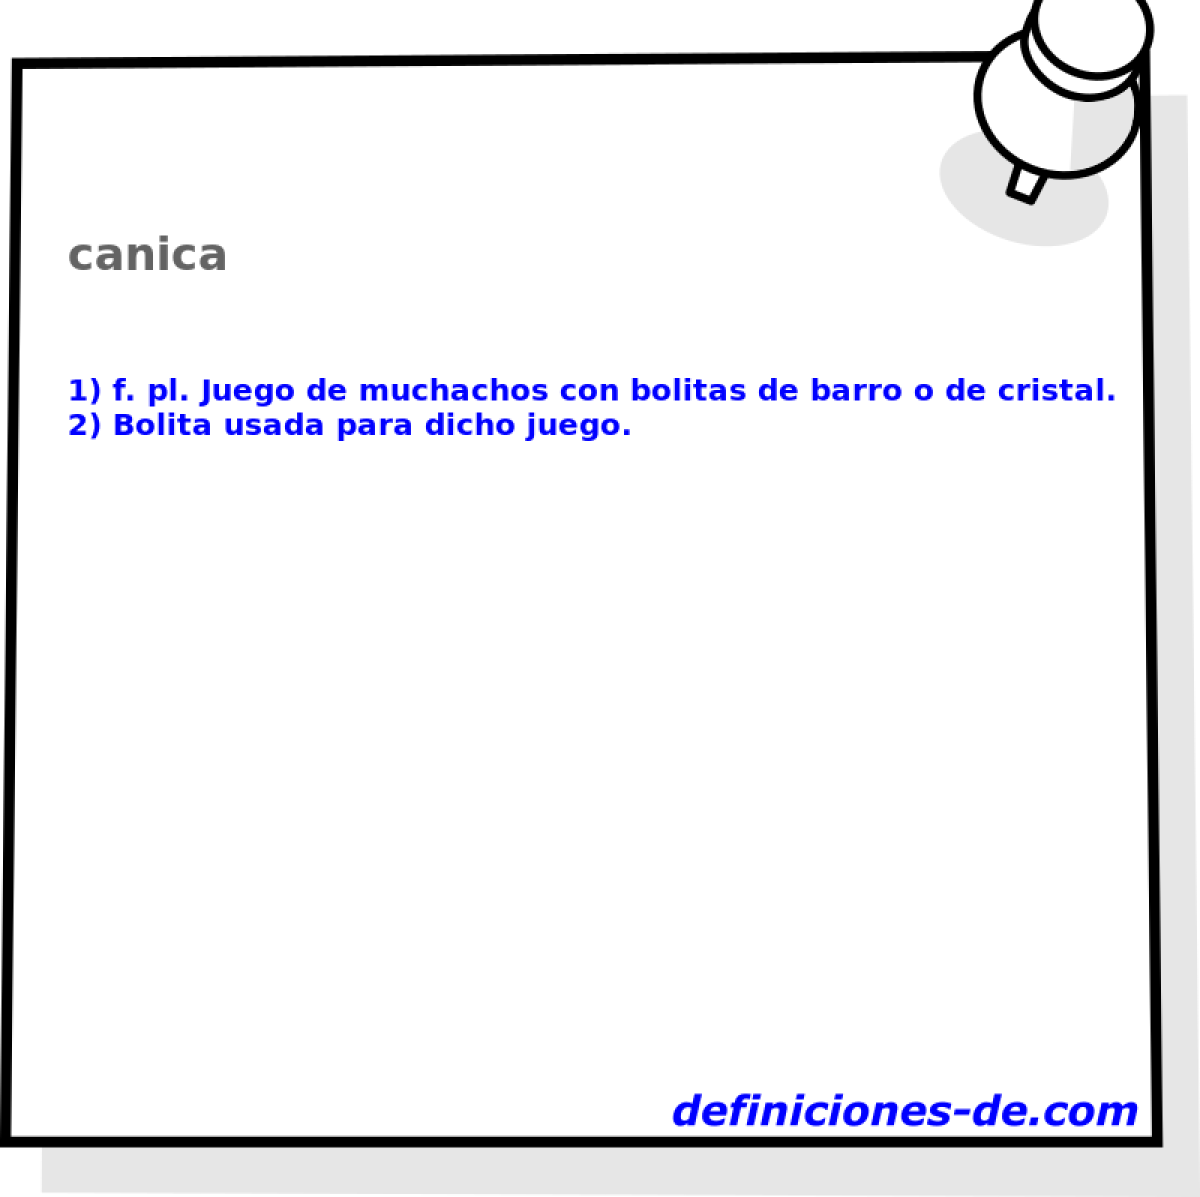 canica 